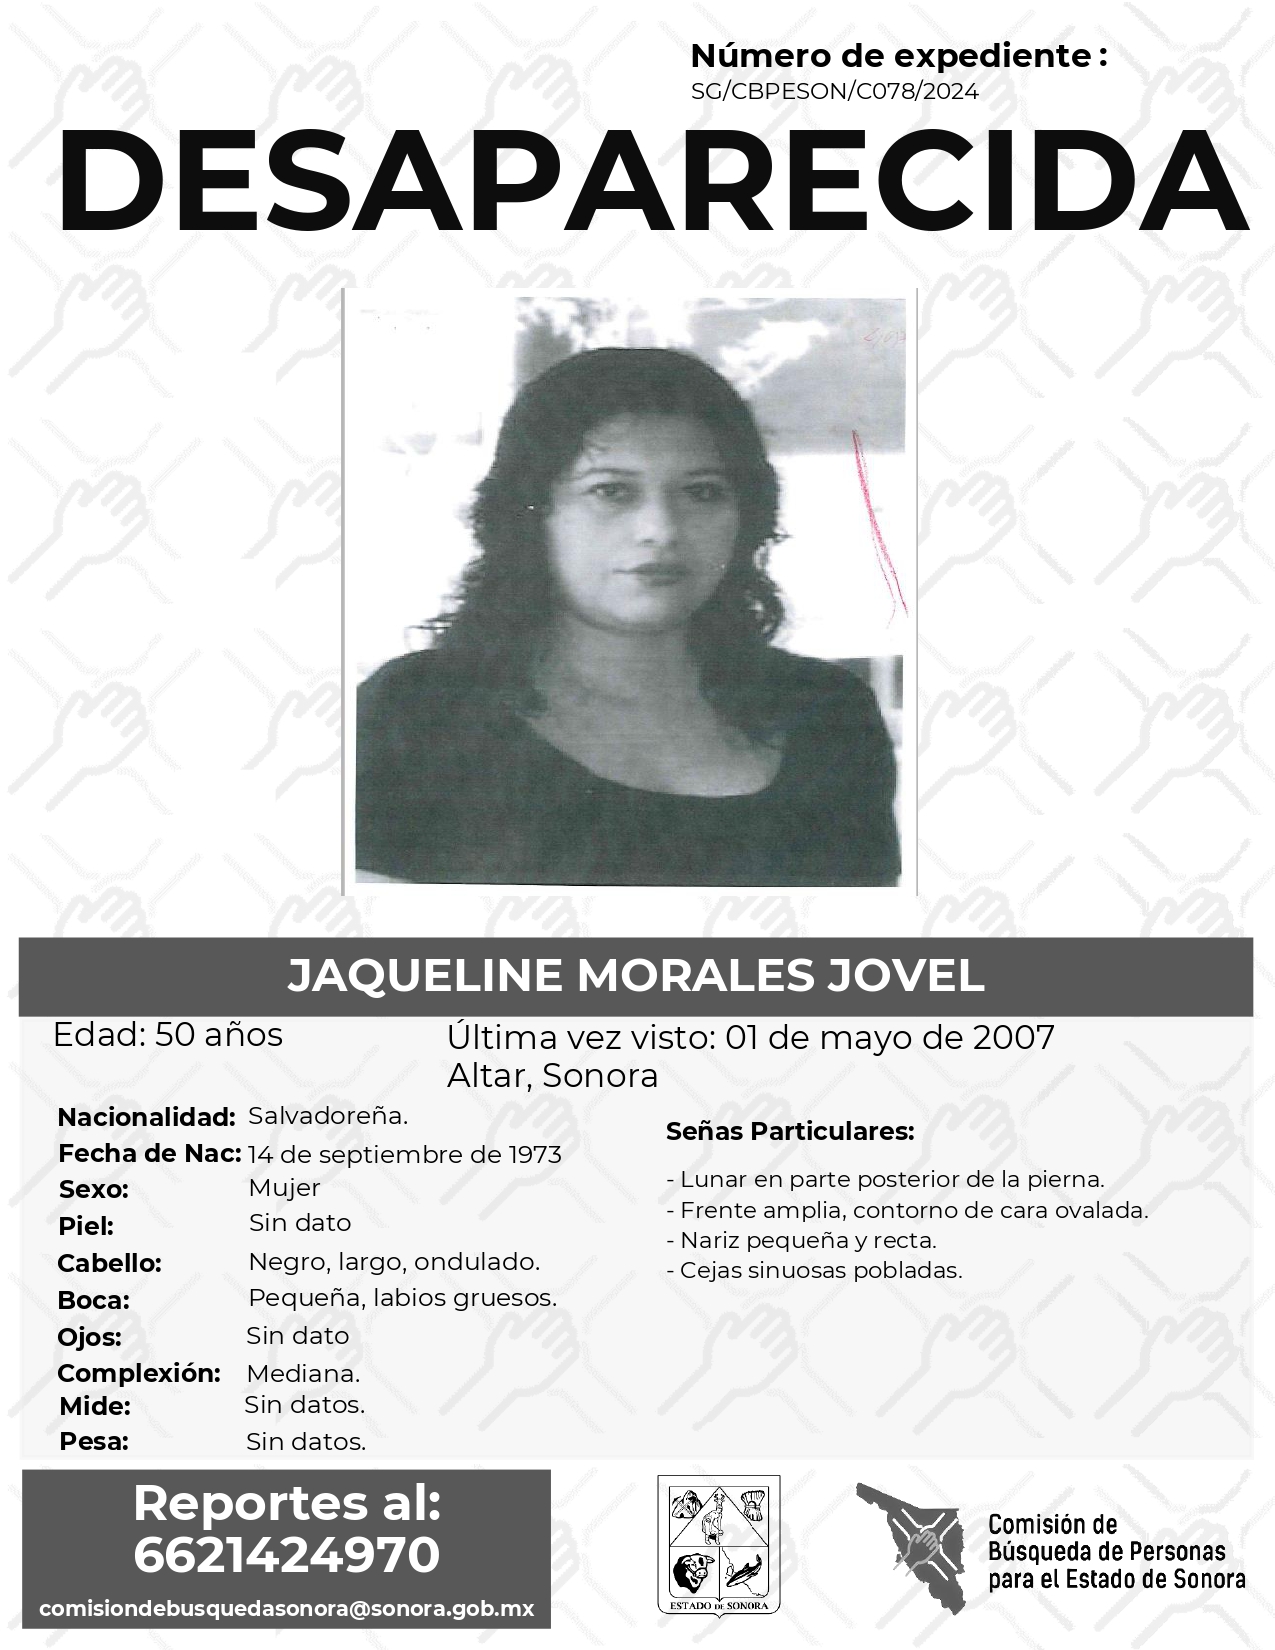 JAQUELINE MORALES JOVEL - DESAPARECIDO